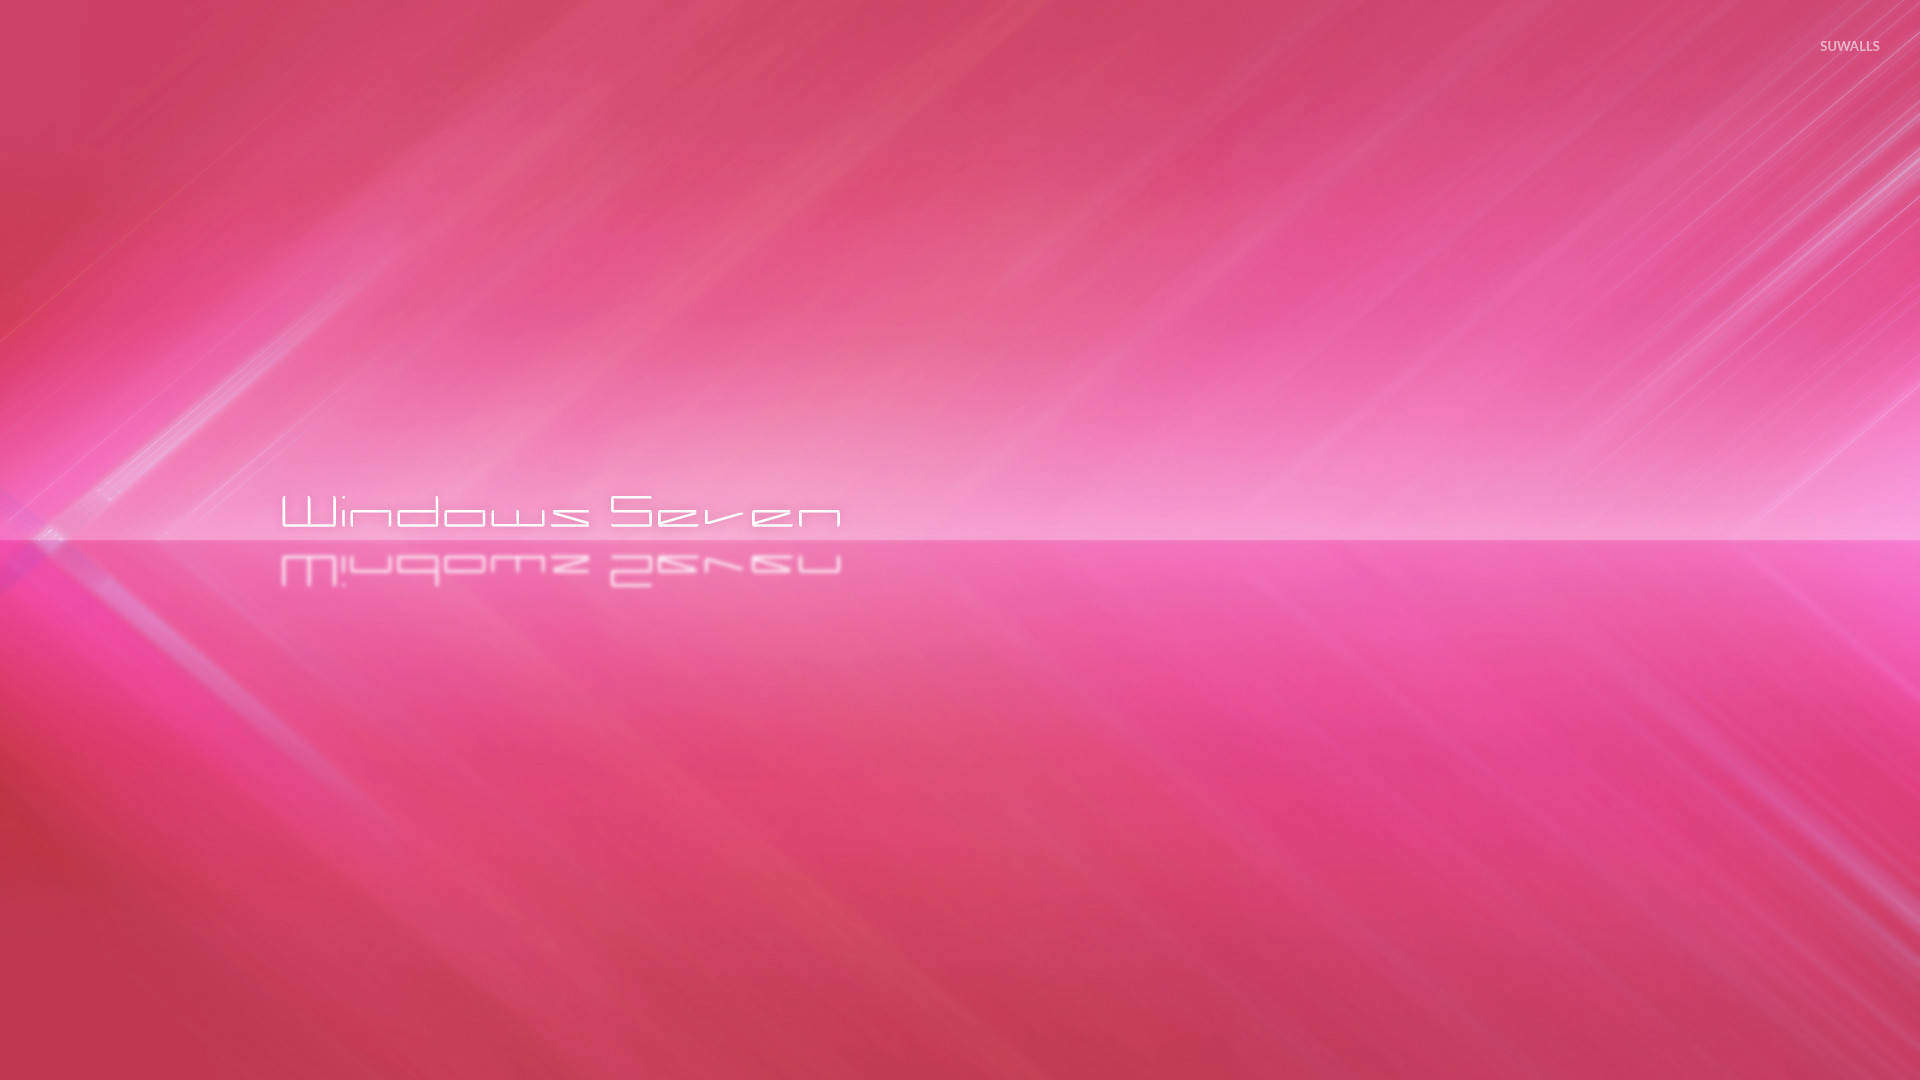 1920x1080 White Windows Seven between pink stripes wallpaper  jpg